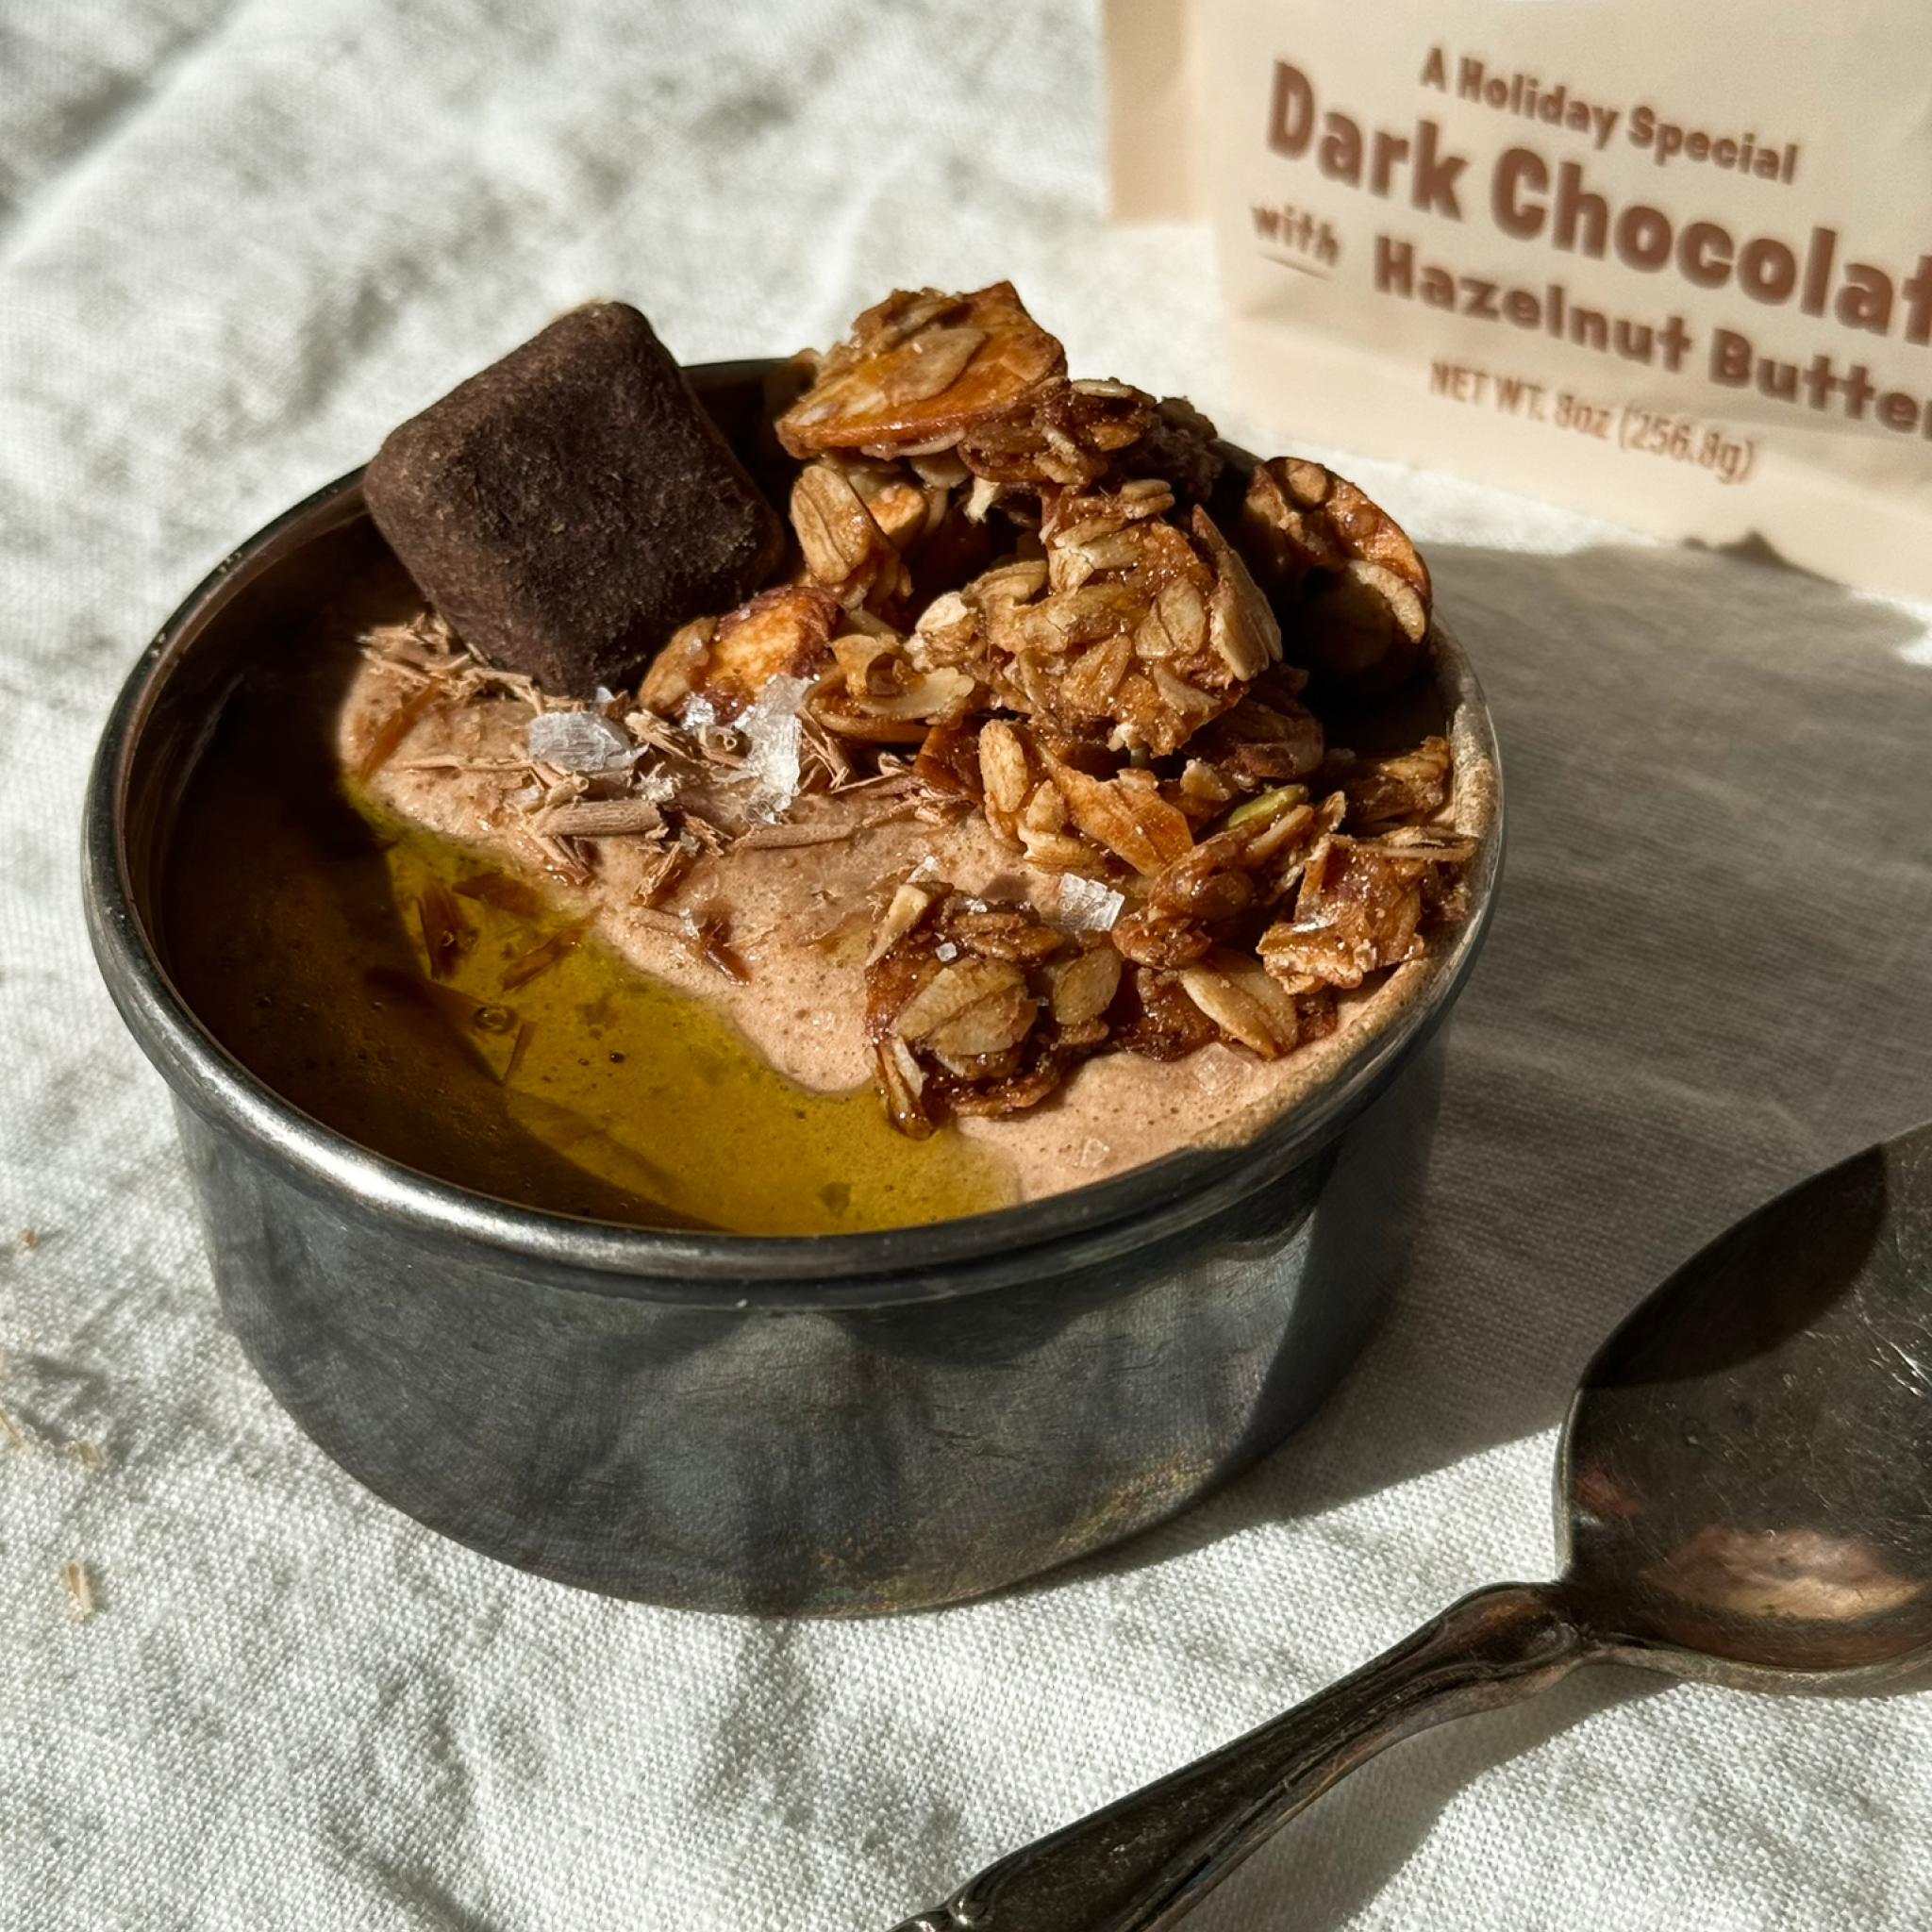 Dark Chocolate with Hazelnut Butter